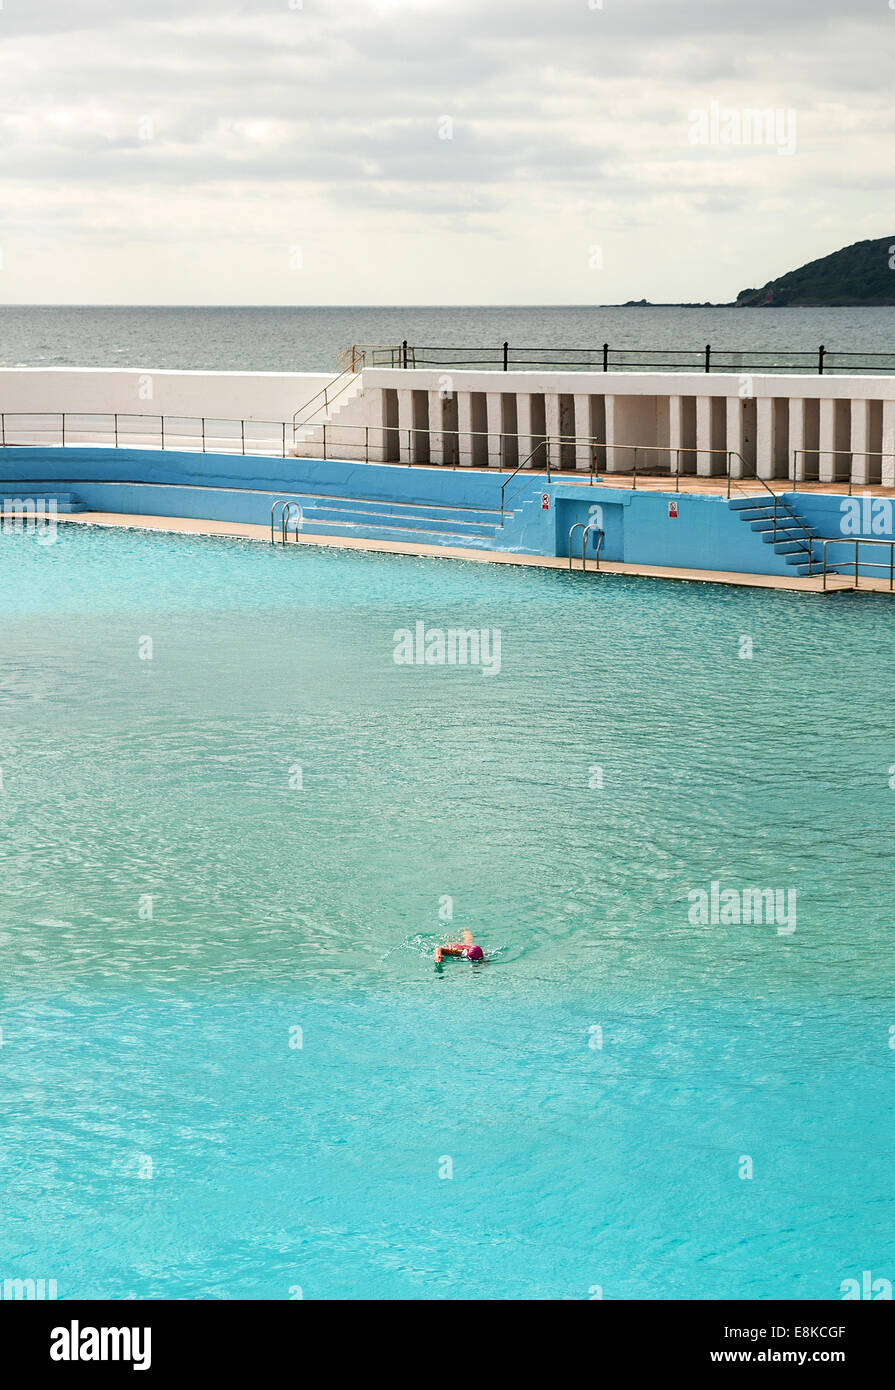 The Jubilee Pool lido in Penzance, Cornwall, UK Stock Photo